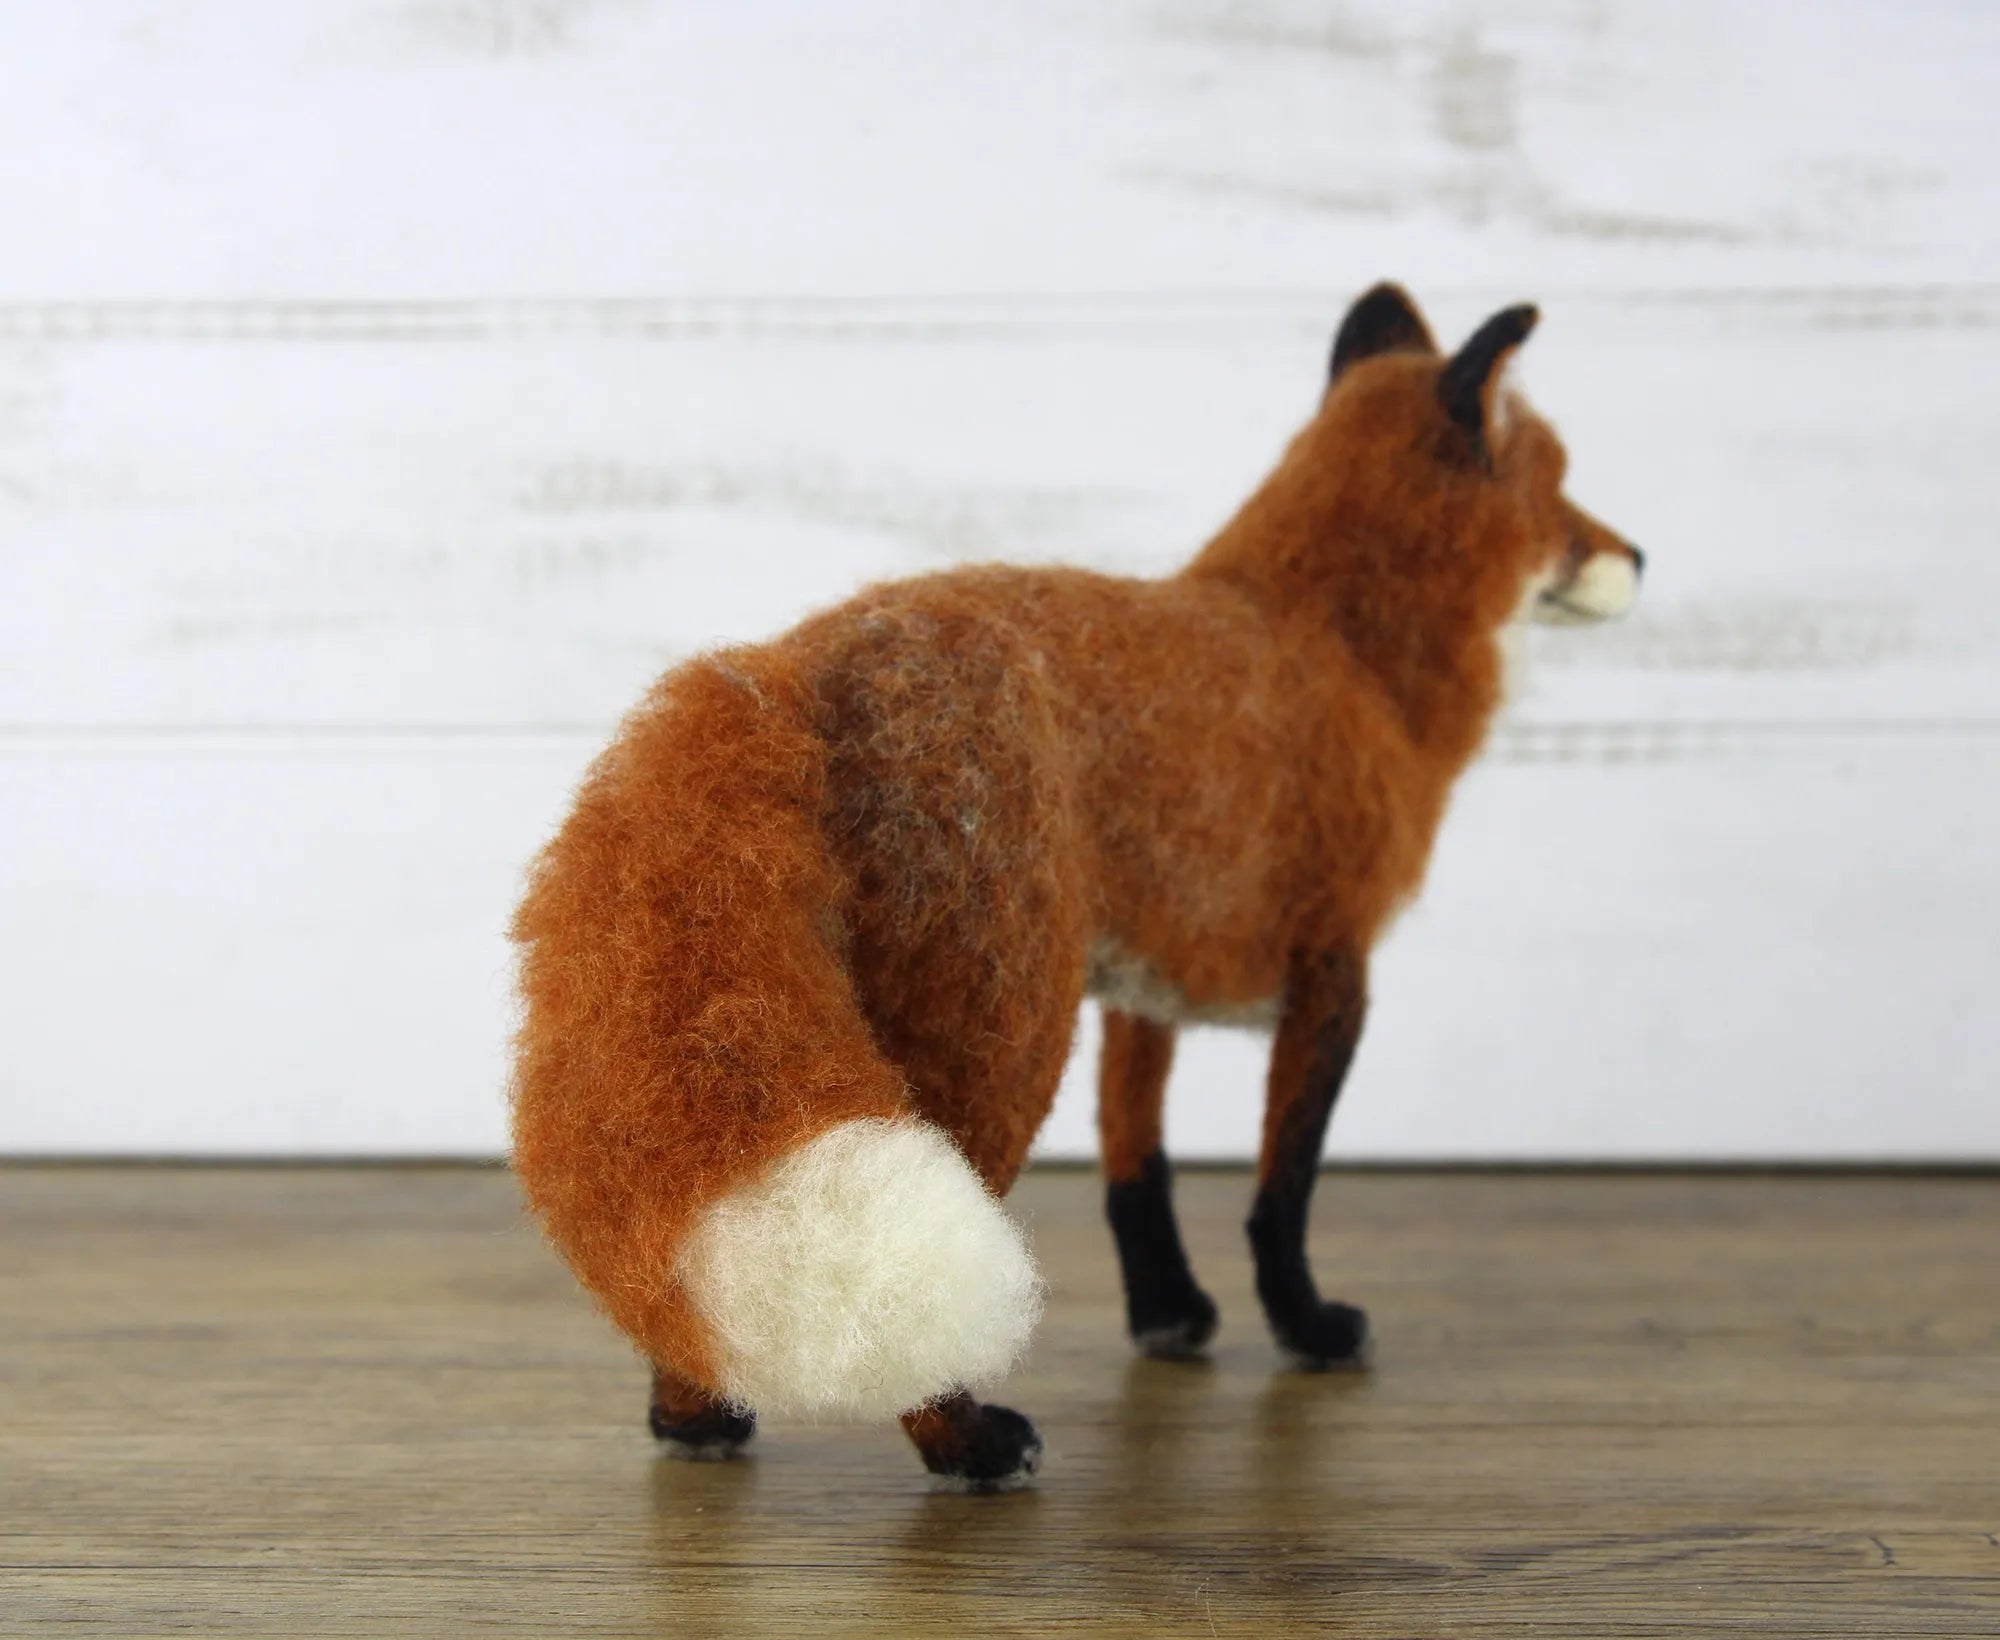 Fabian The Fox | Needle Felting Kit - World of Wool